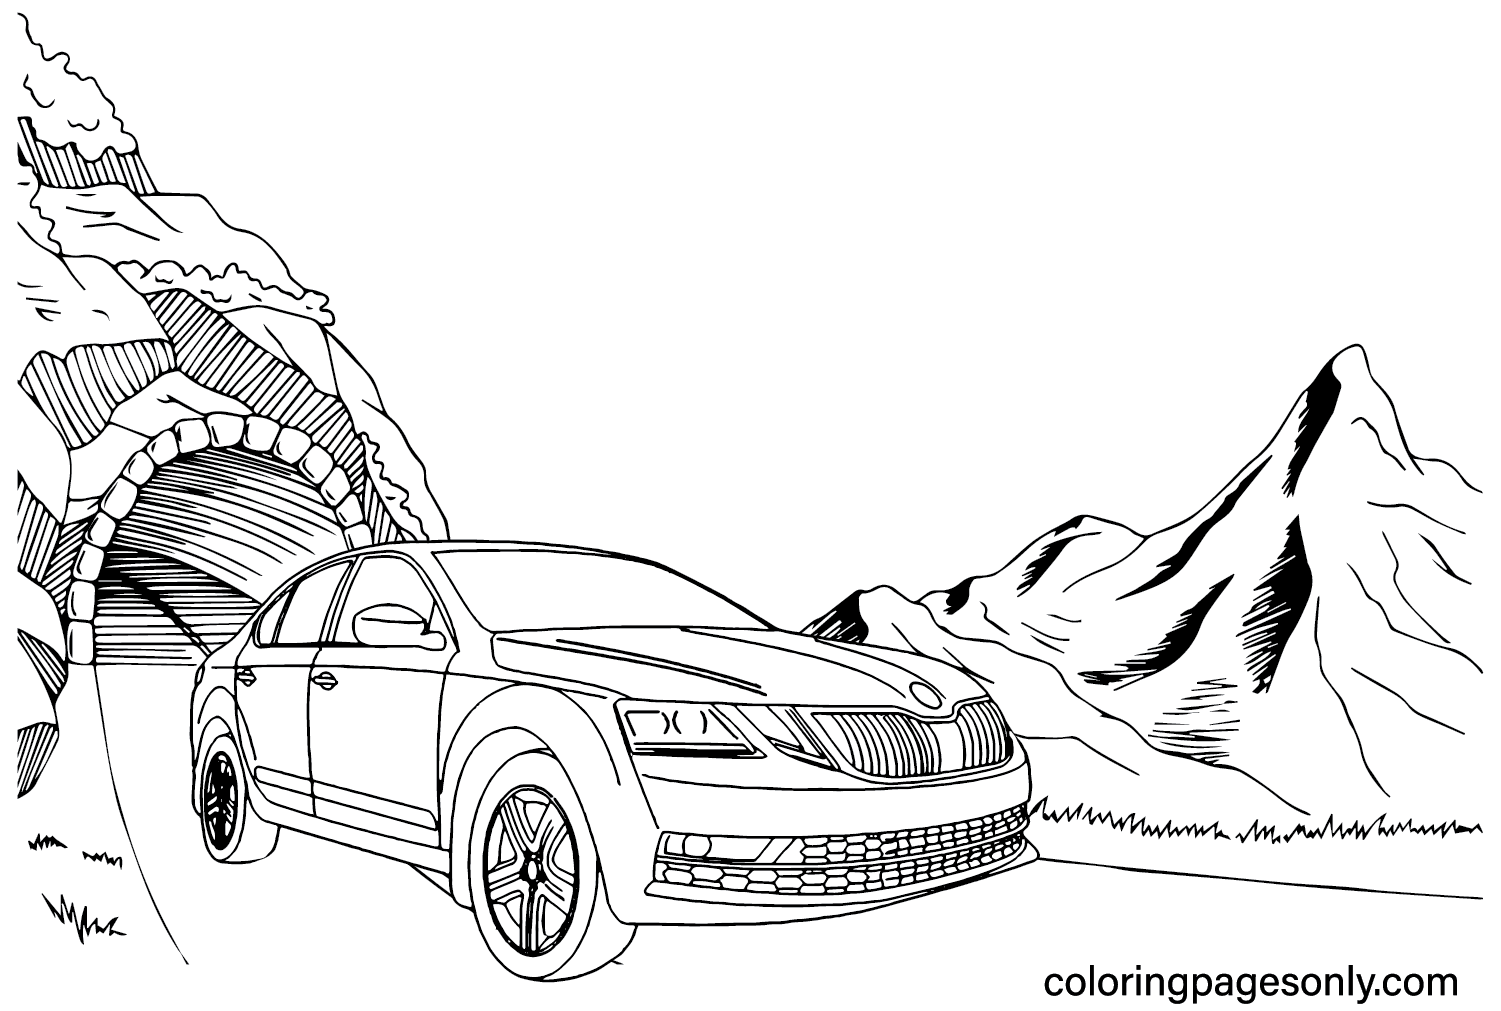 Coloring Page Skoda Car from Skoda